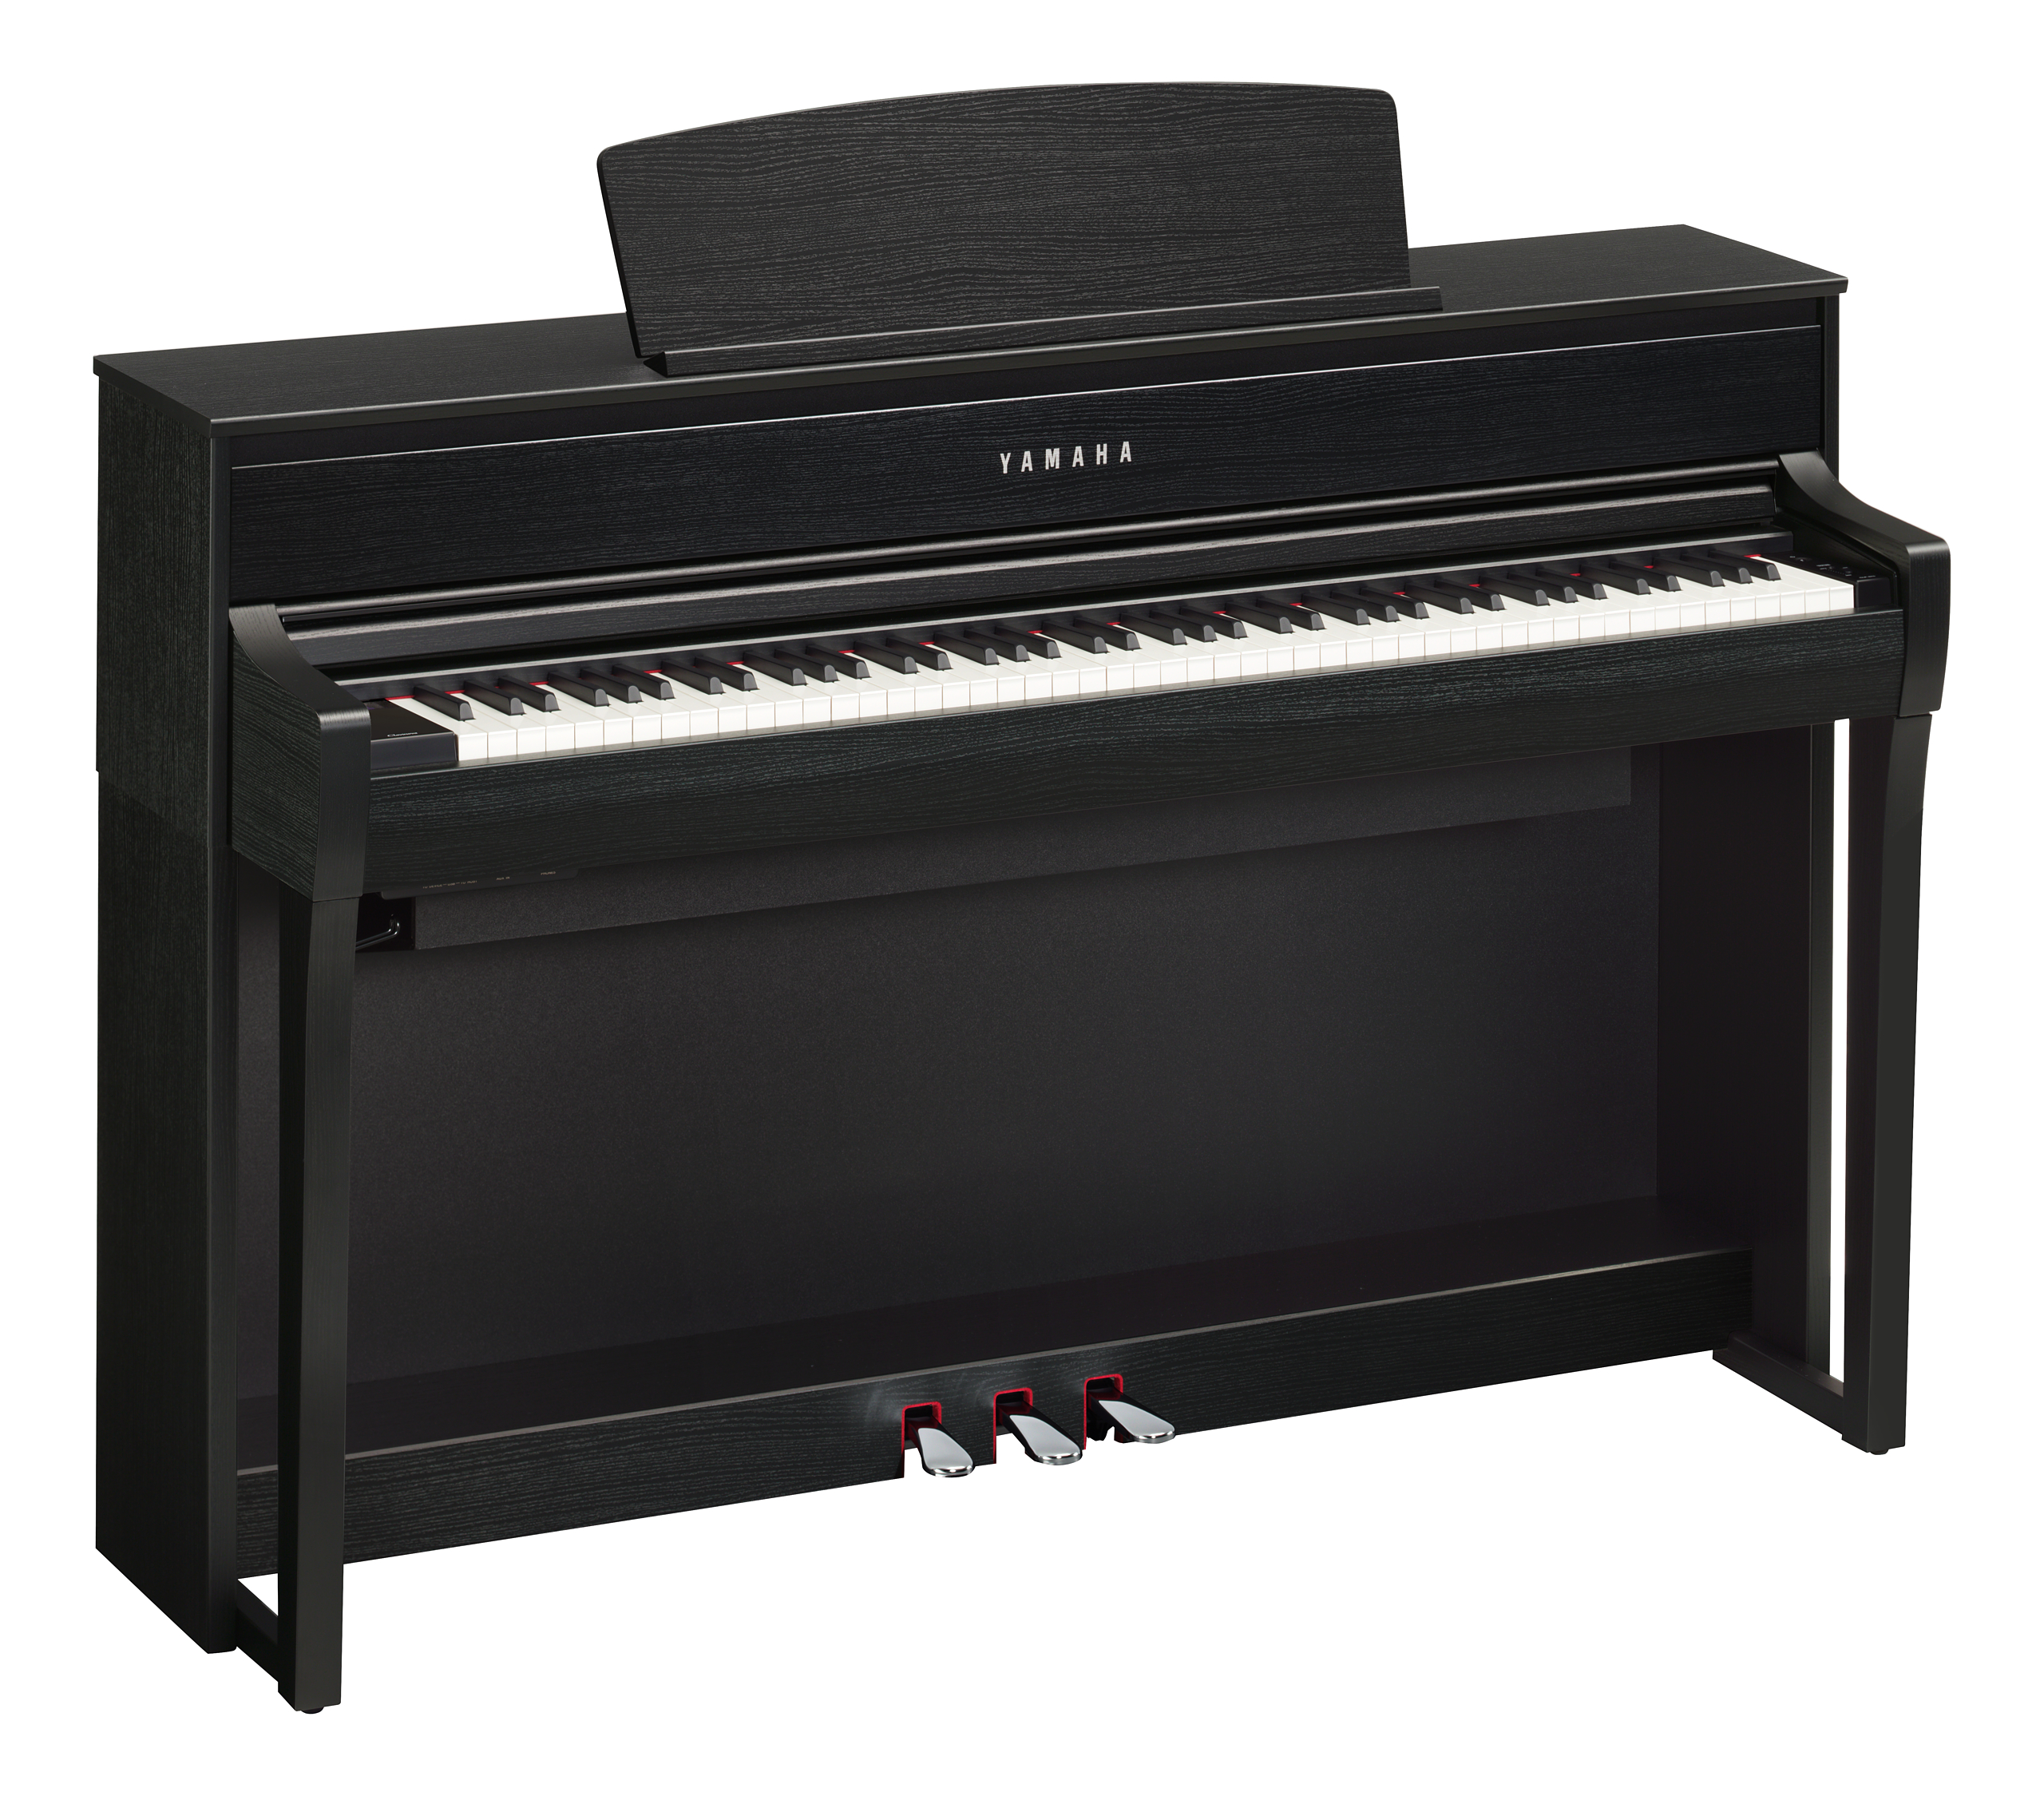 Yamaha Clp775b - Digital piano with stand - Variation 1